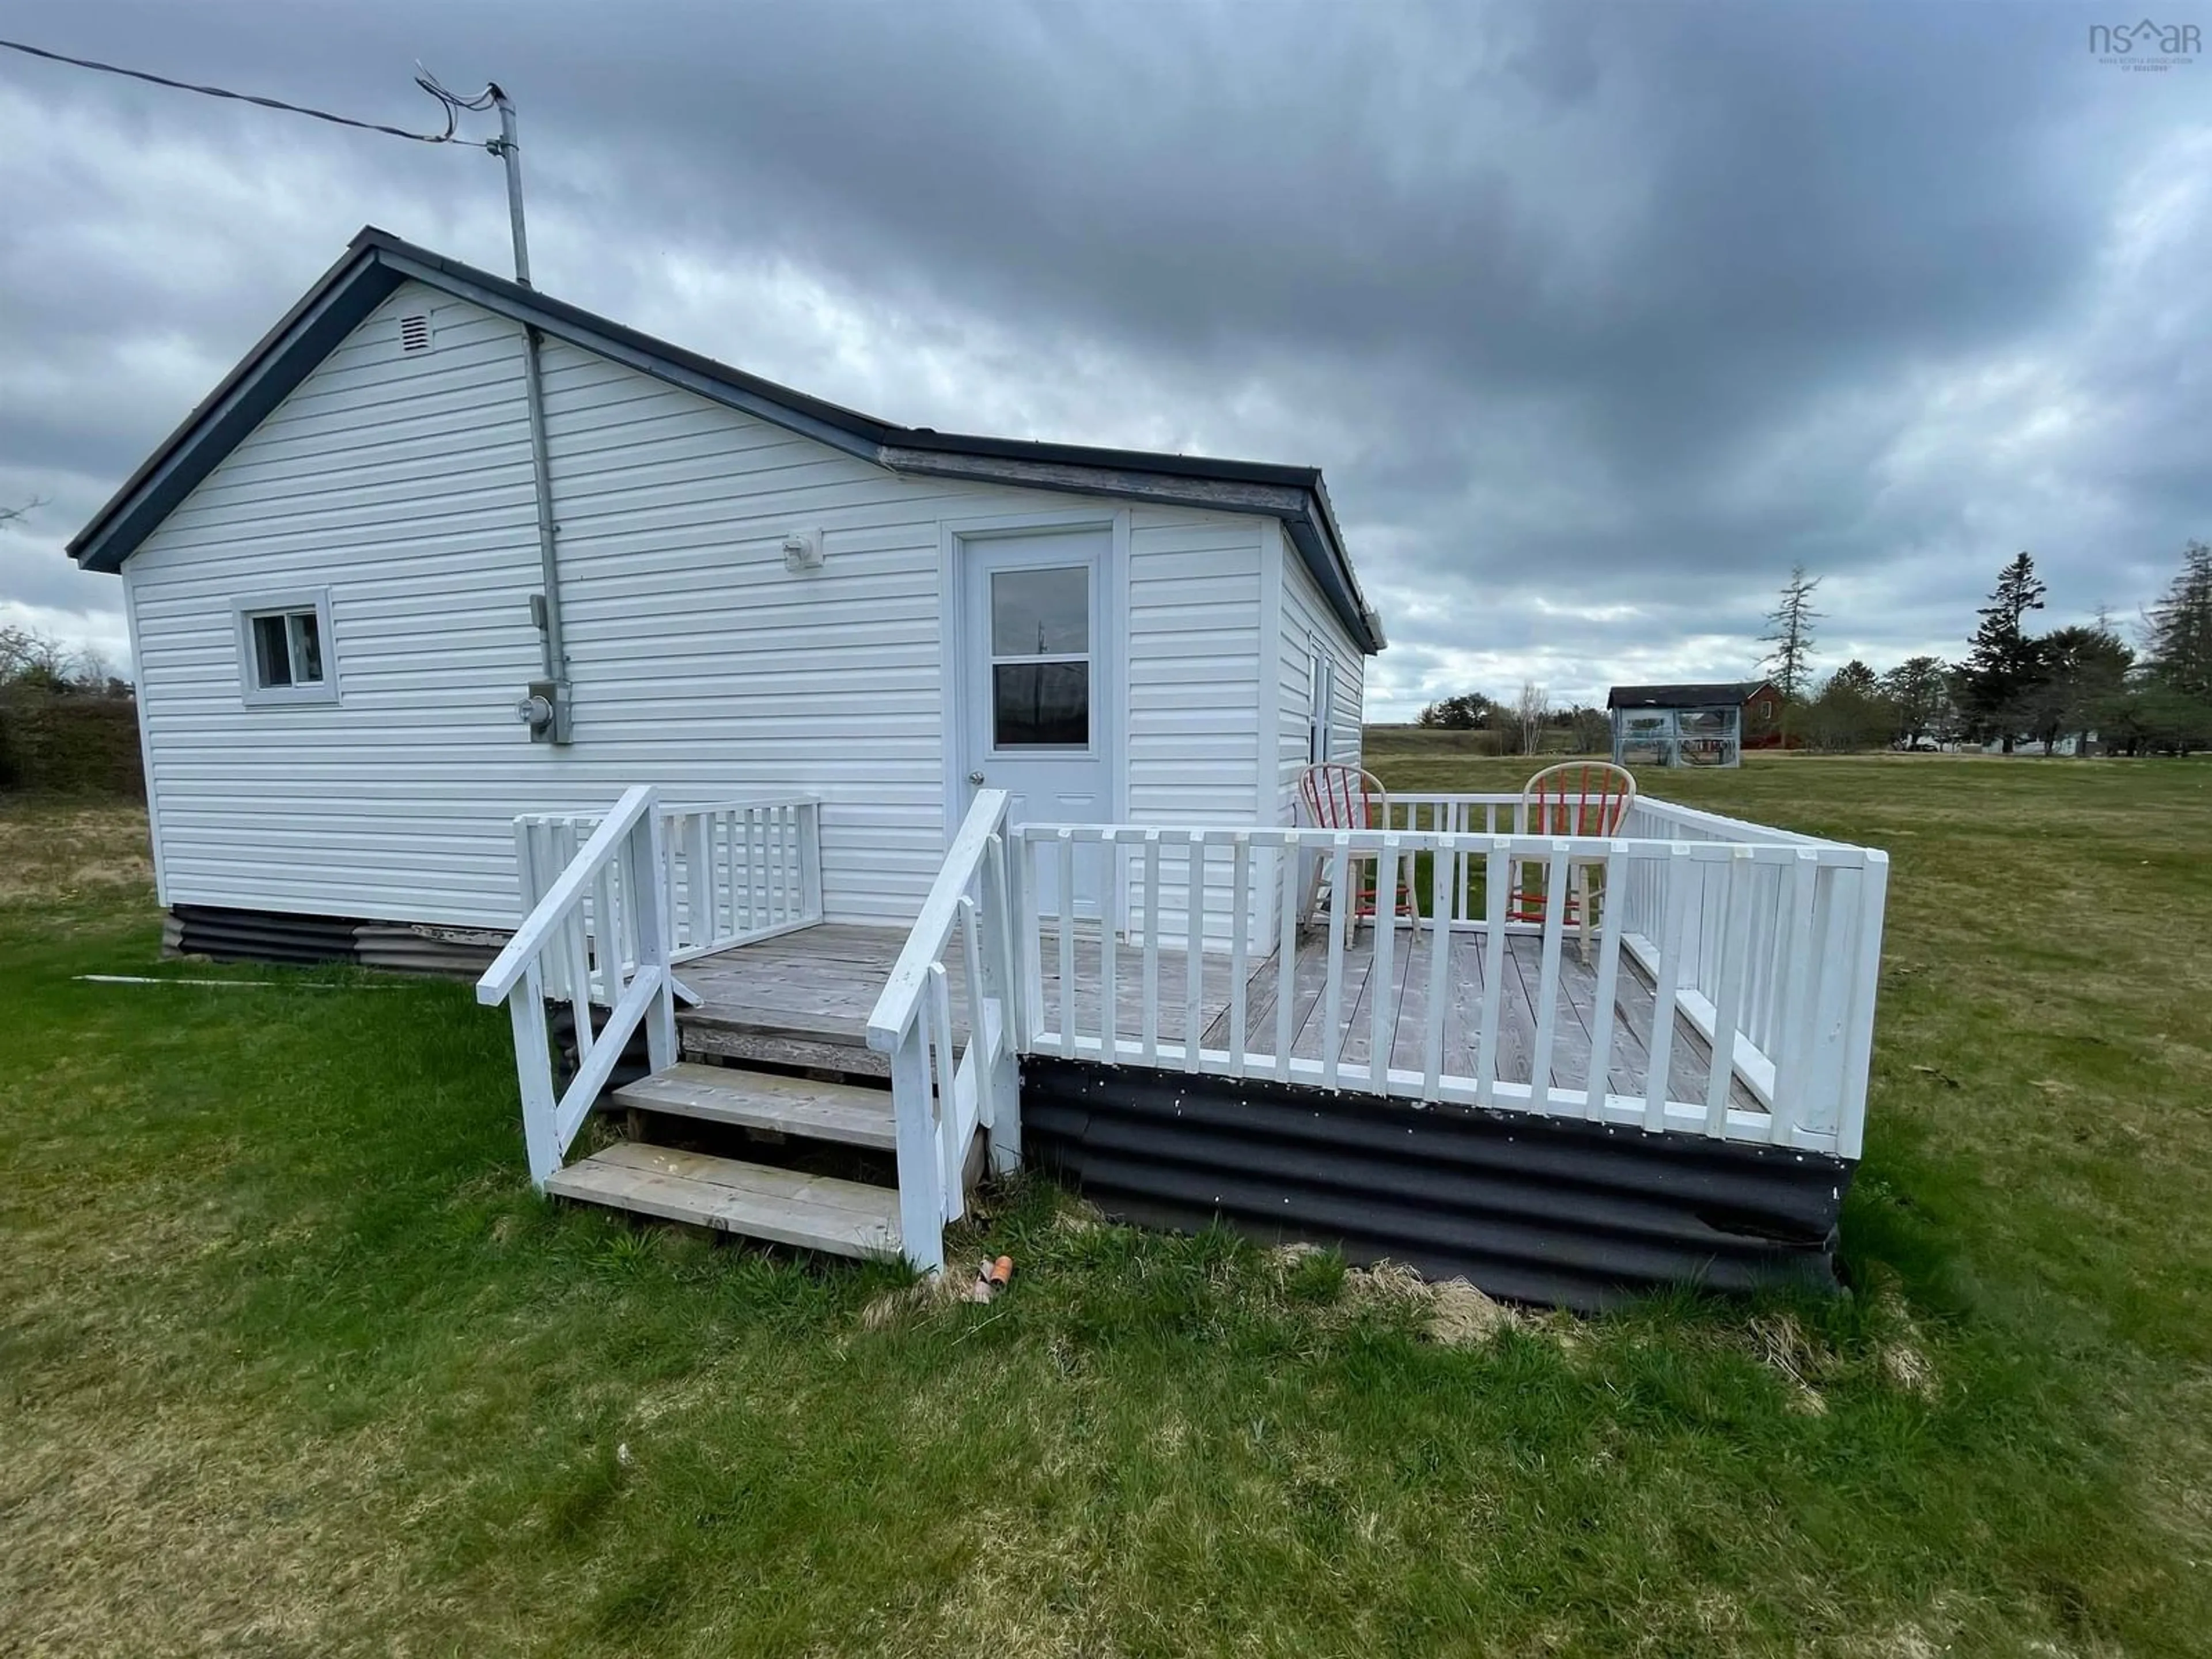 Cottage for 368 Ramshead River Rd, Diligent River Nova Scotia B0M 1S0